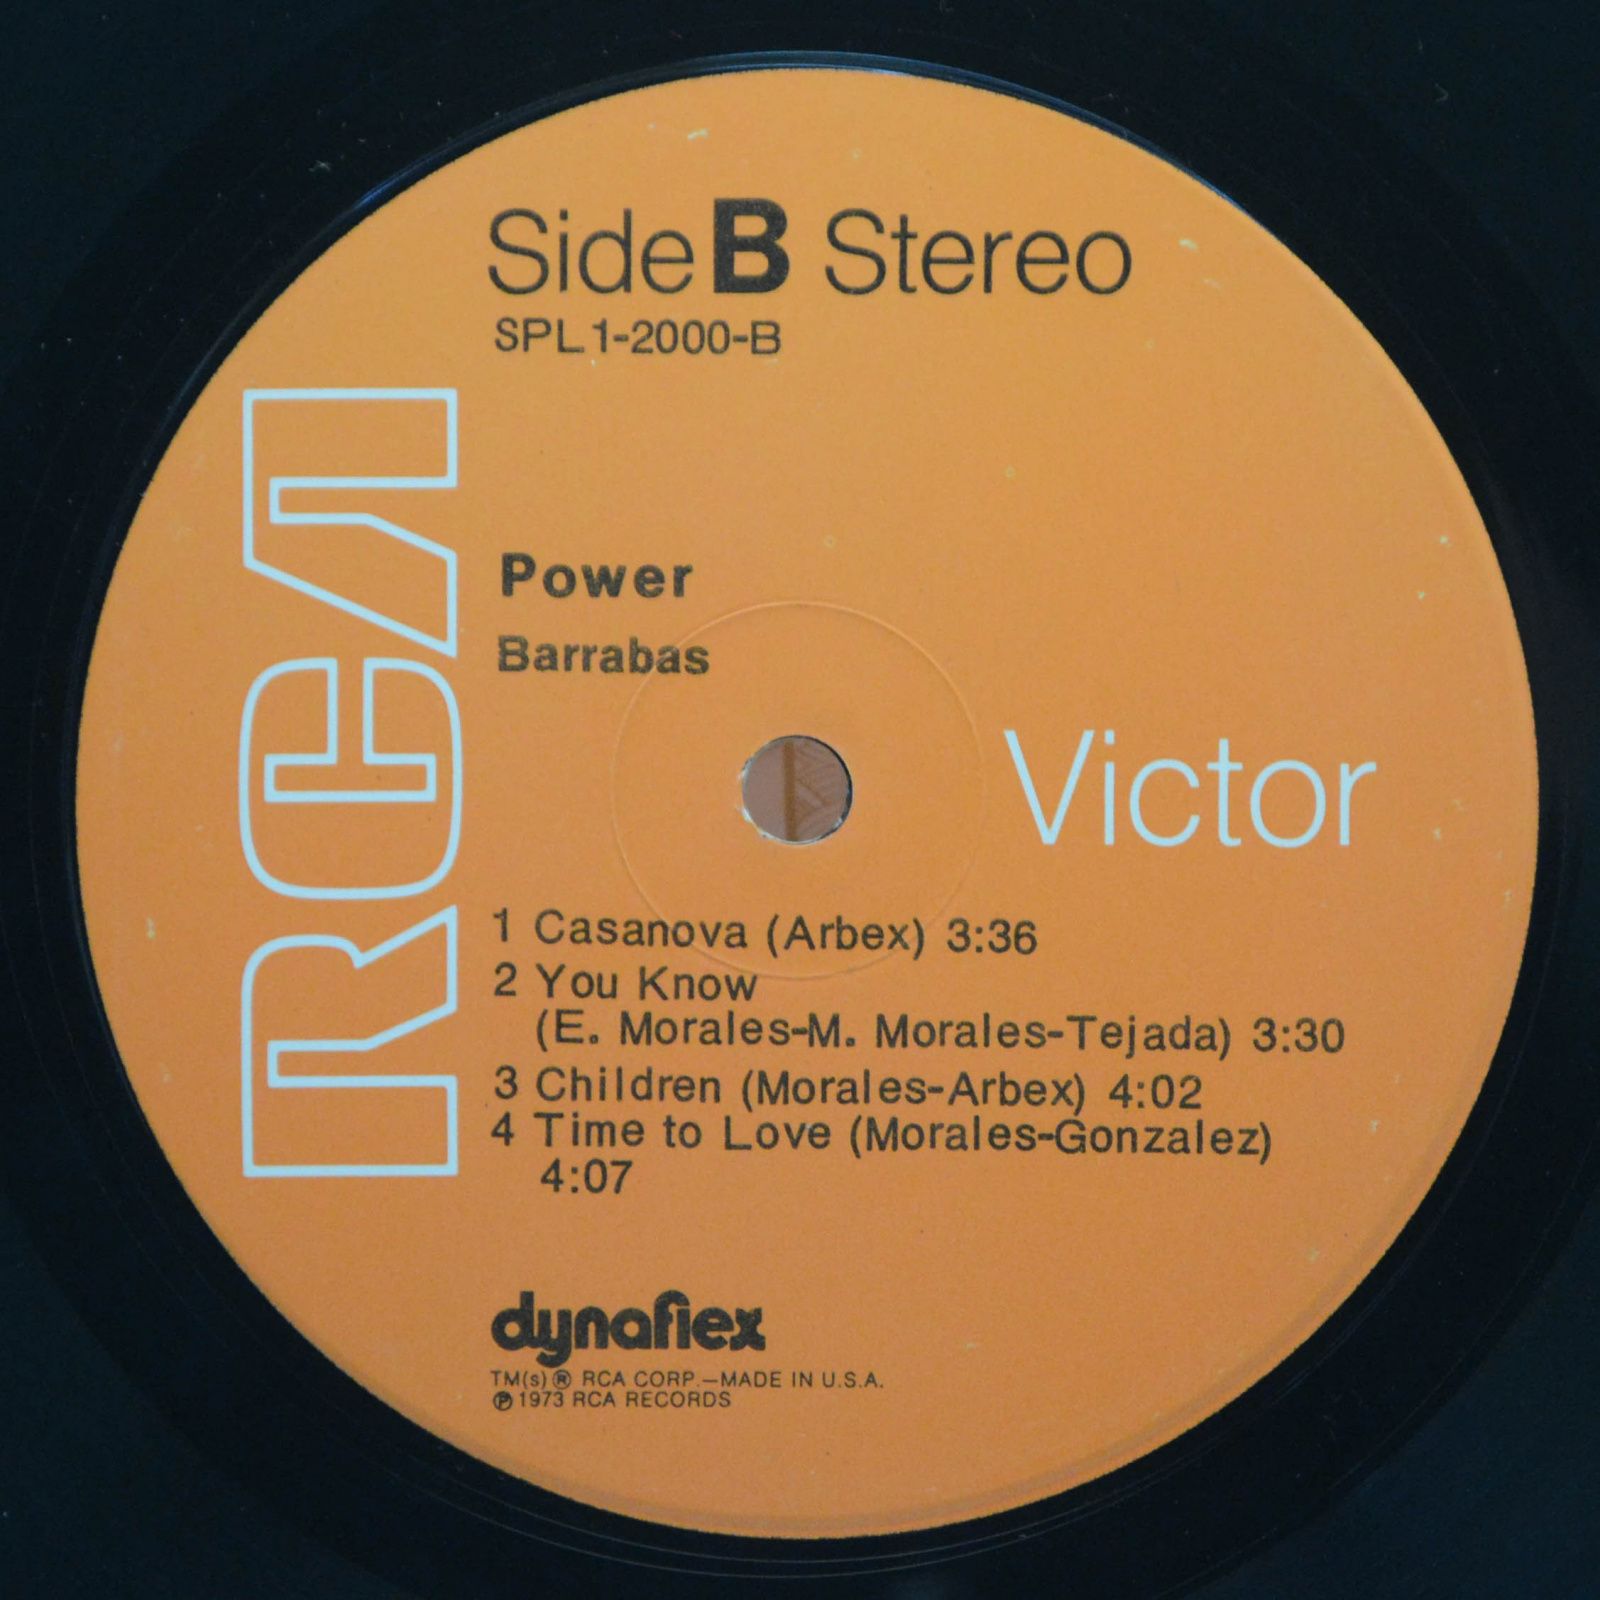 Barrabas — Power, 1973